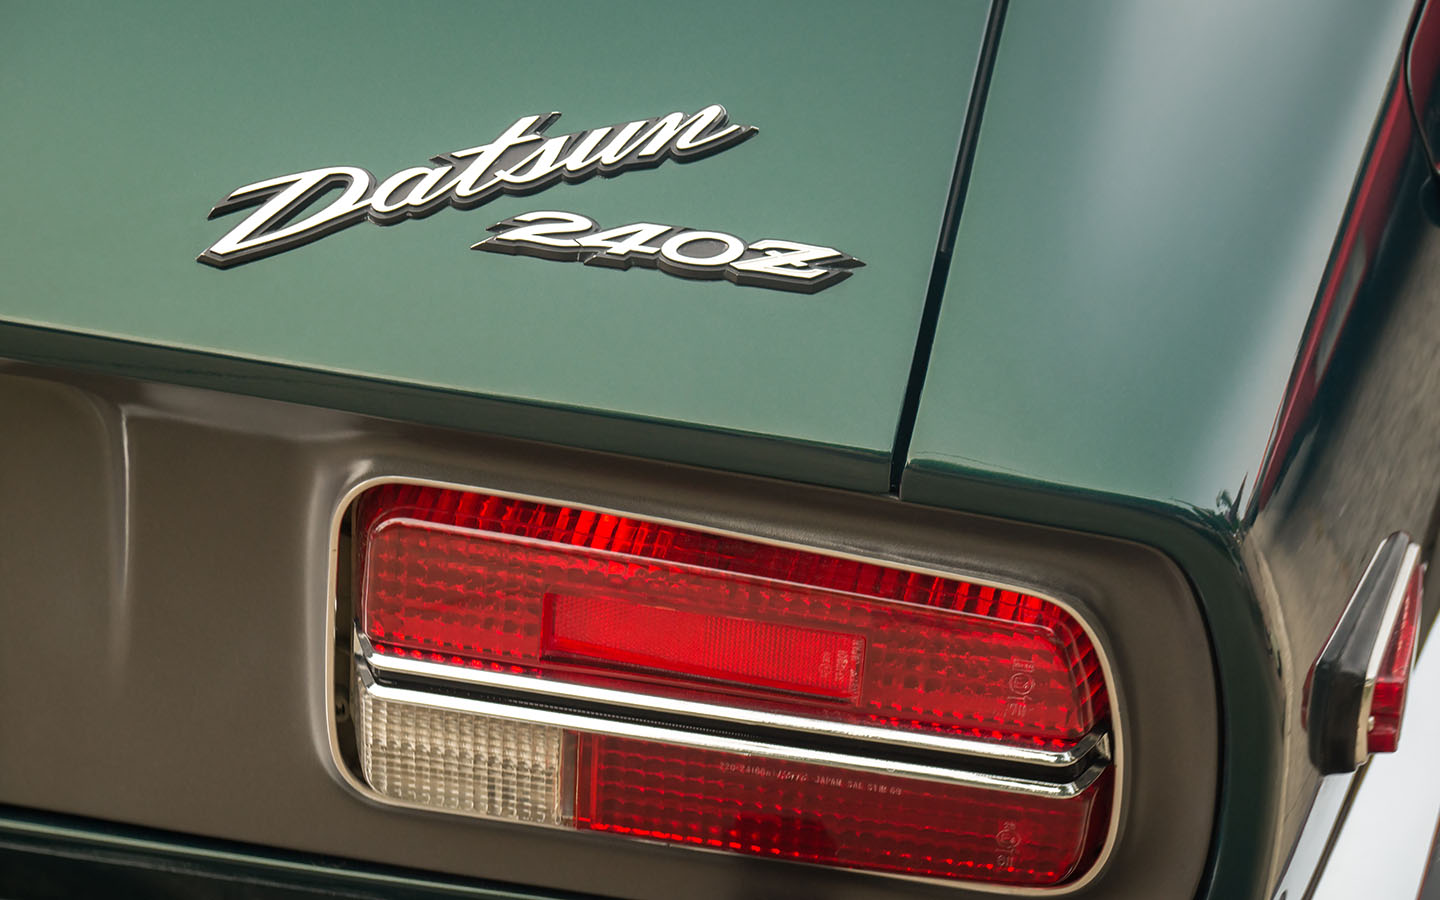 Nissan Models History like the Datsun 